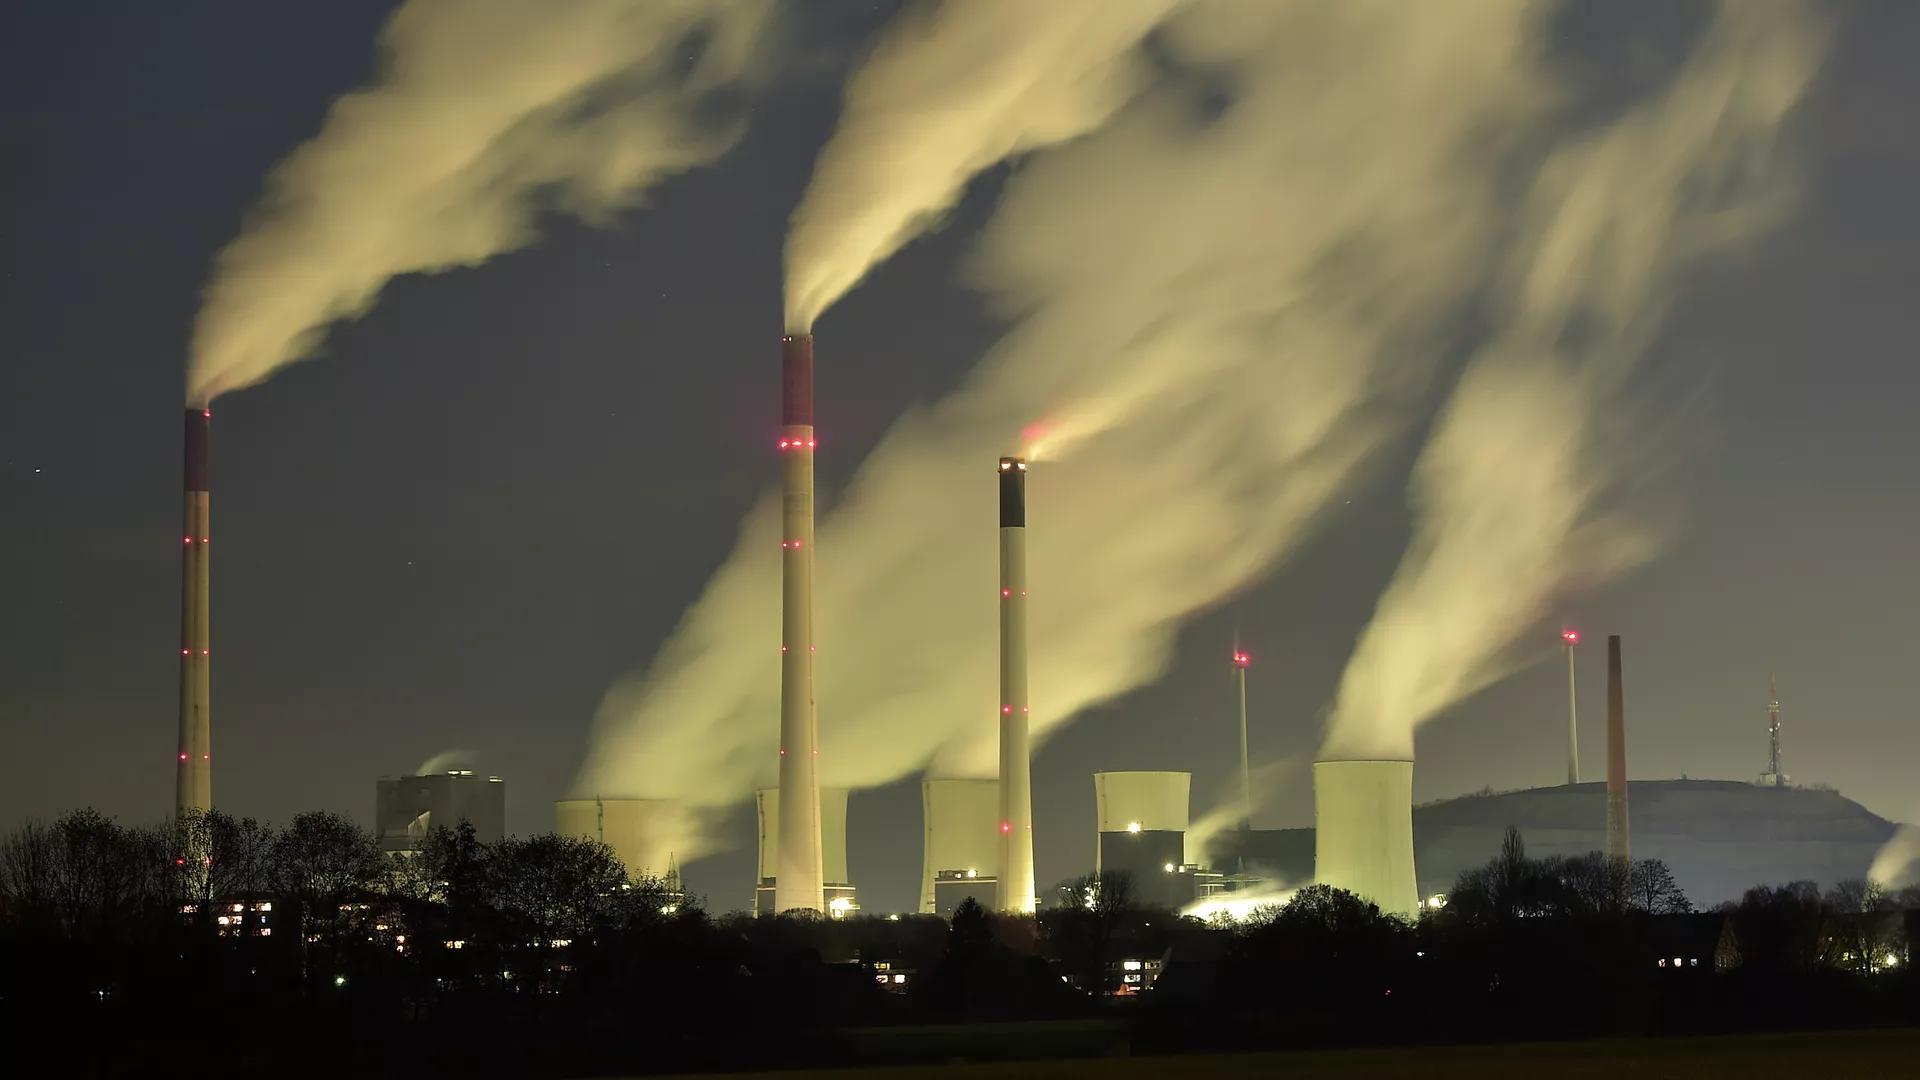 Billionaires Emit Million Times More Greenhouse Gas Than Average People, NGO Says